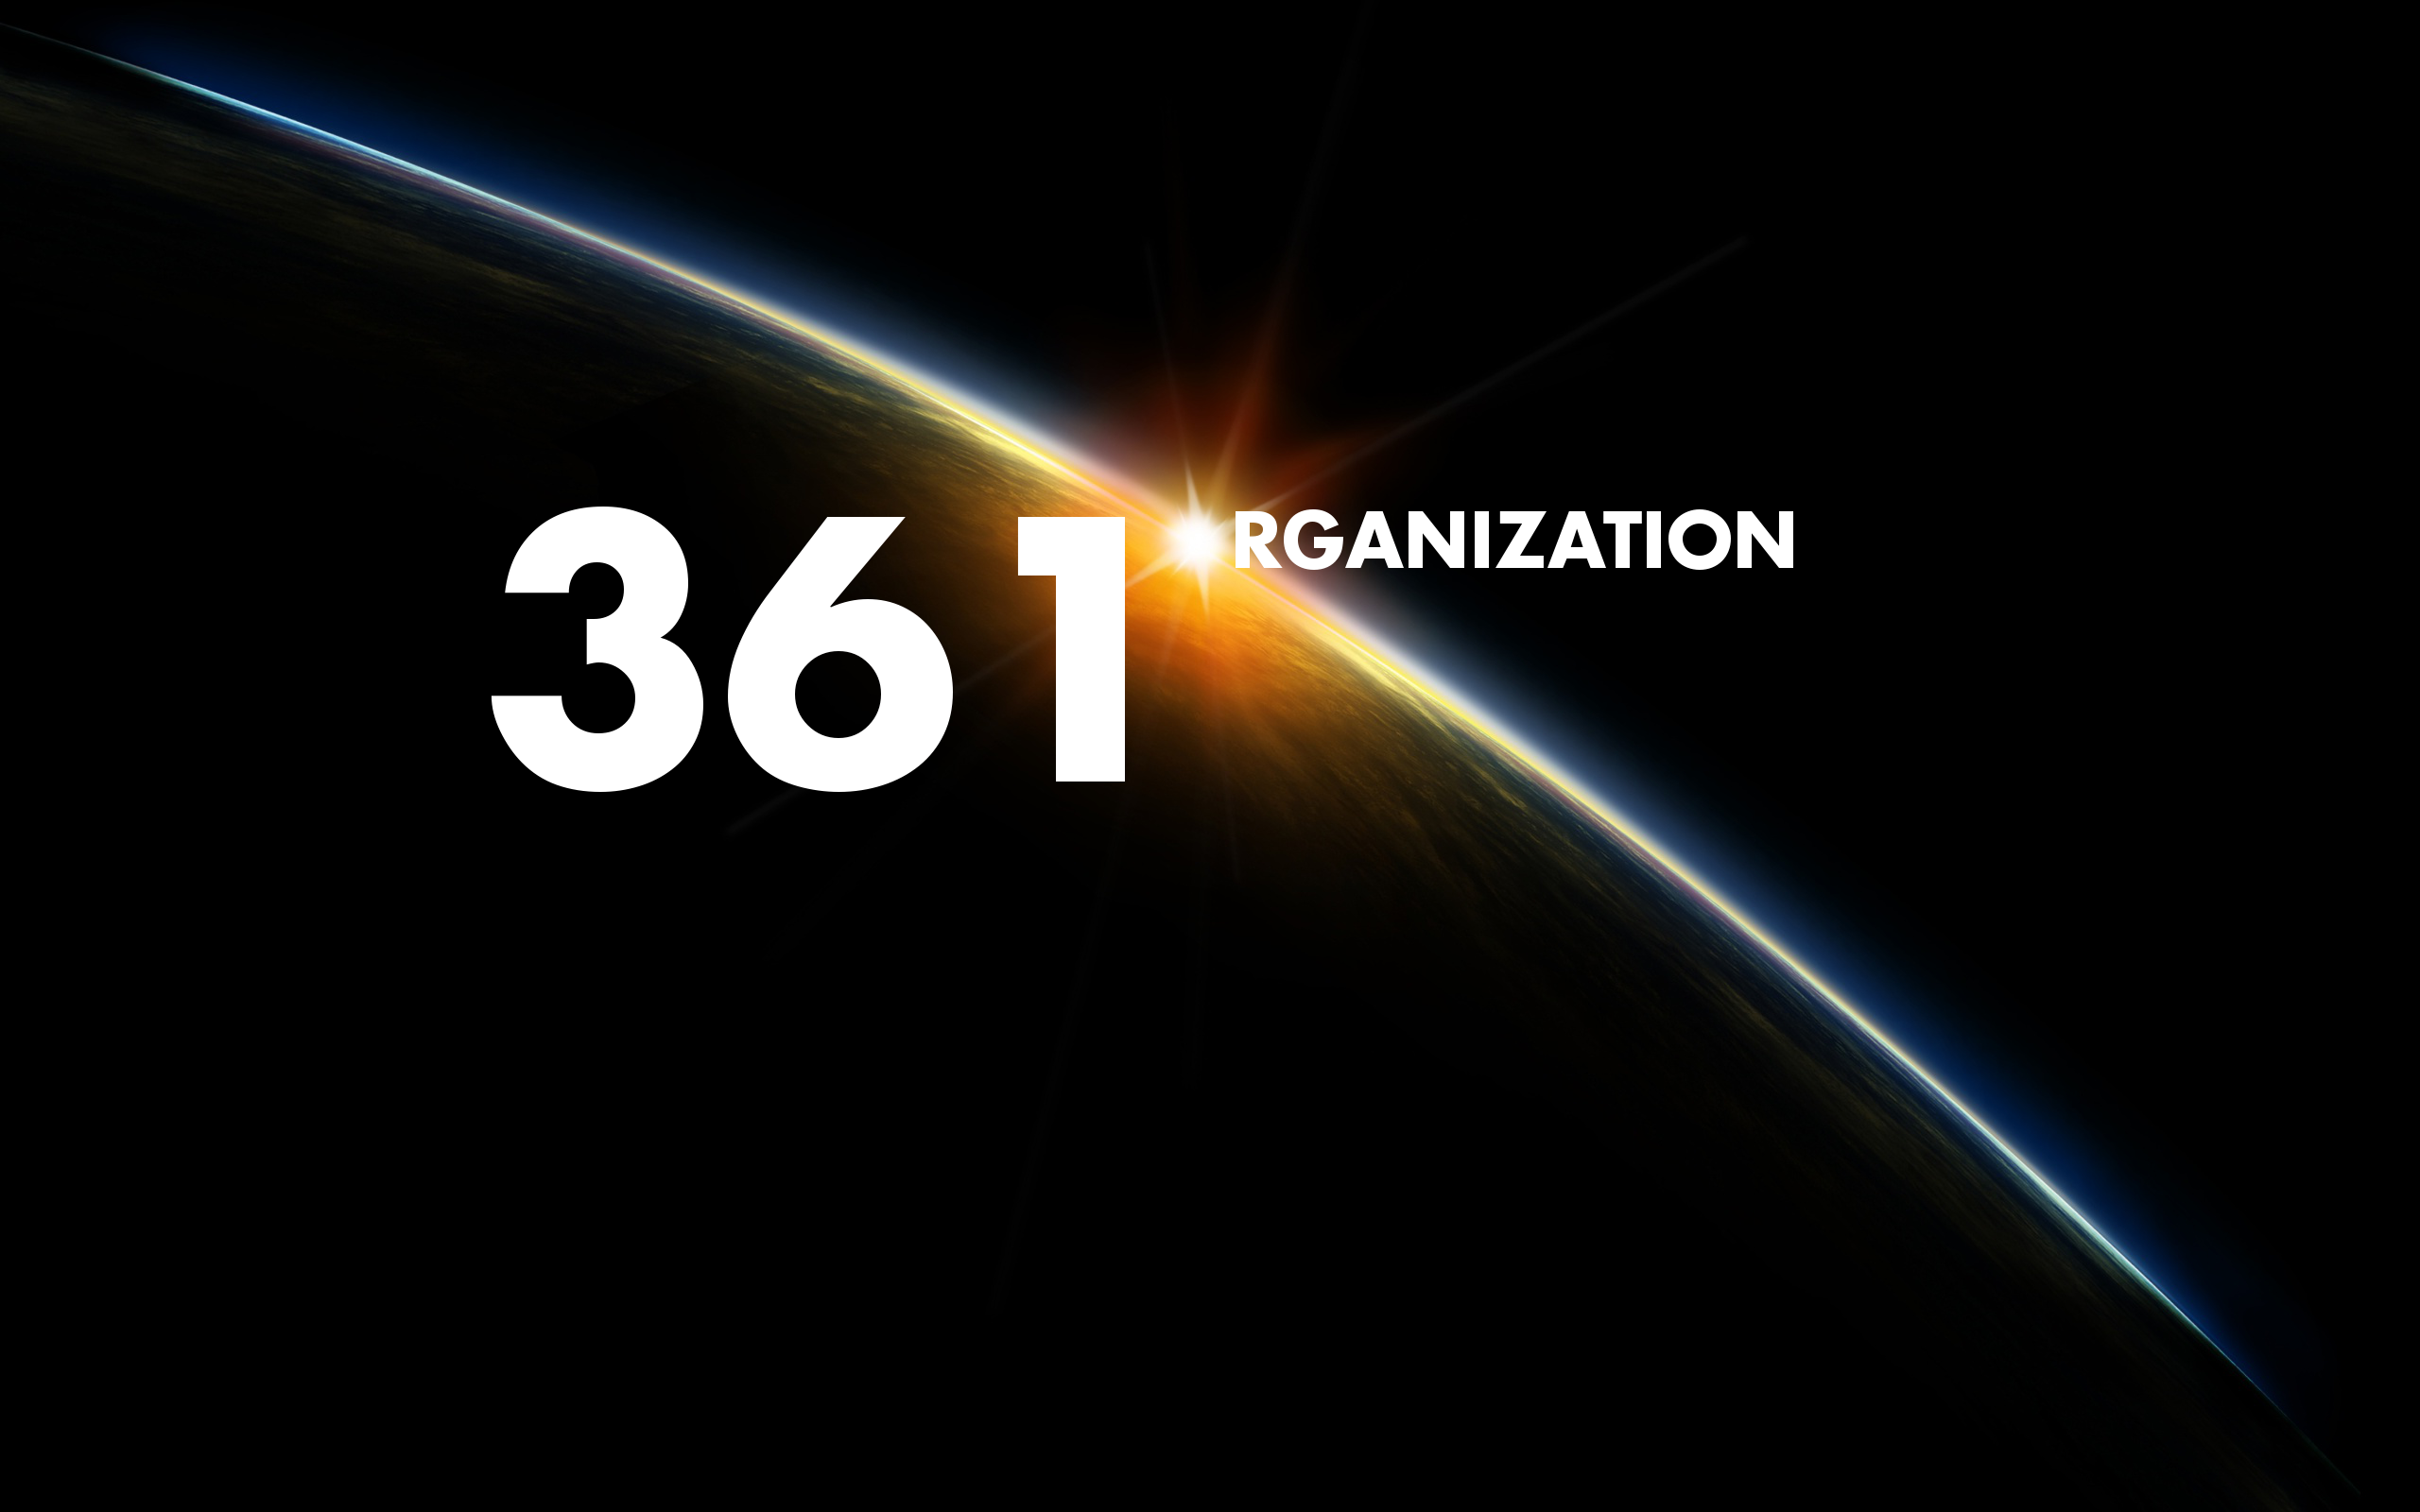 361 Organization - sConfini Ca' Foscari cover image